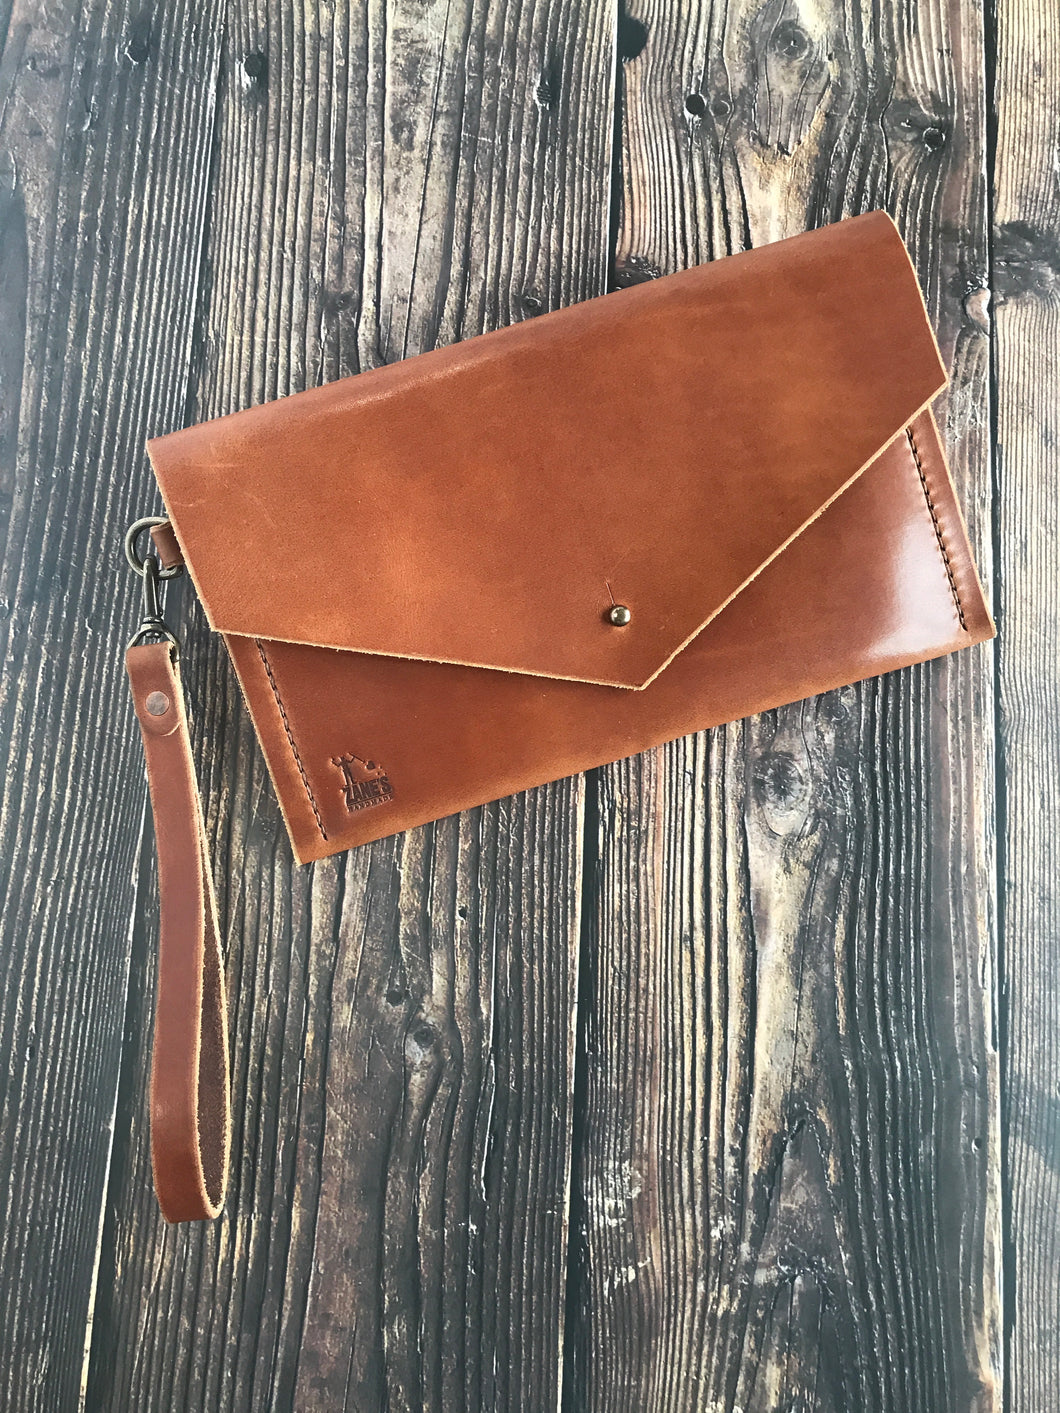 Envelope Clutch - Buck Brown Harness Leather - Wrist Strap